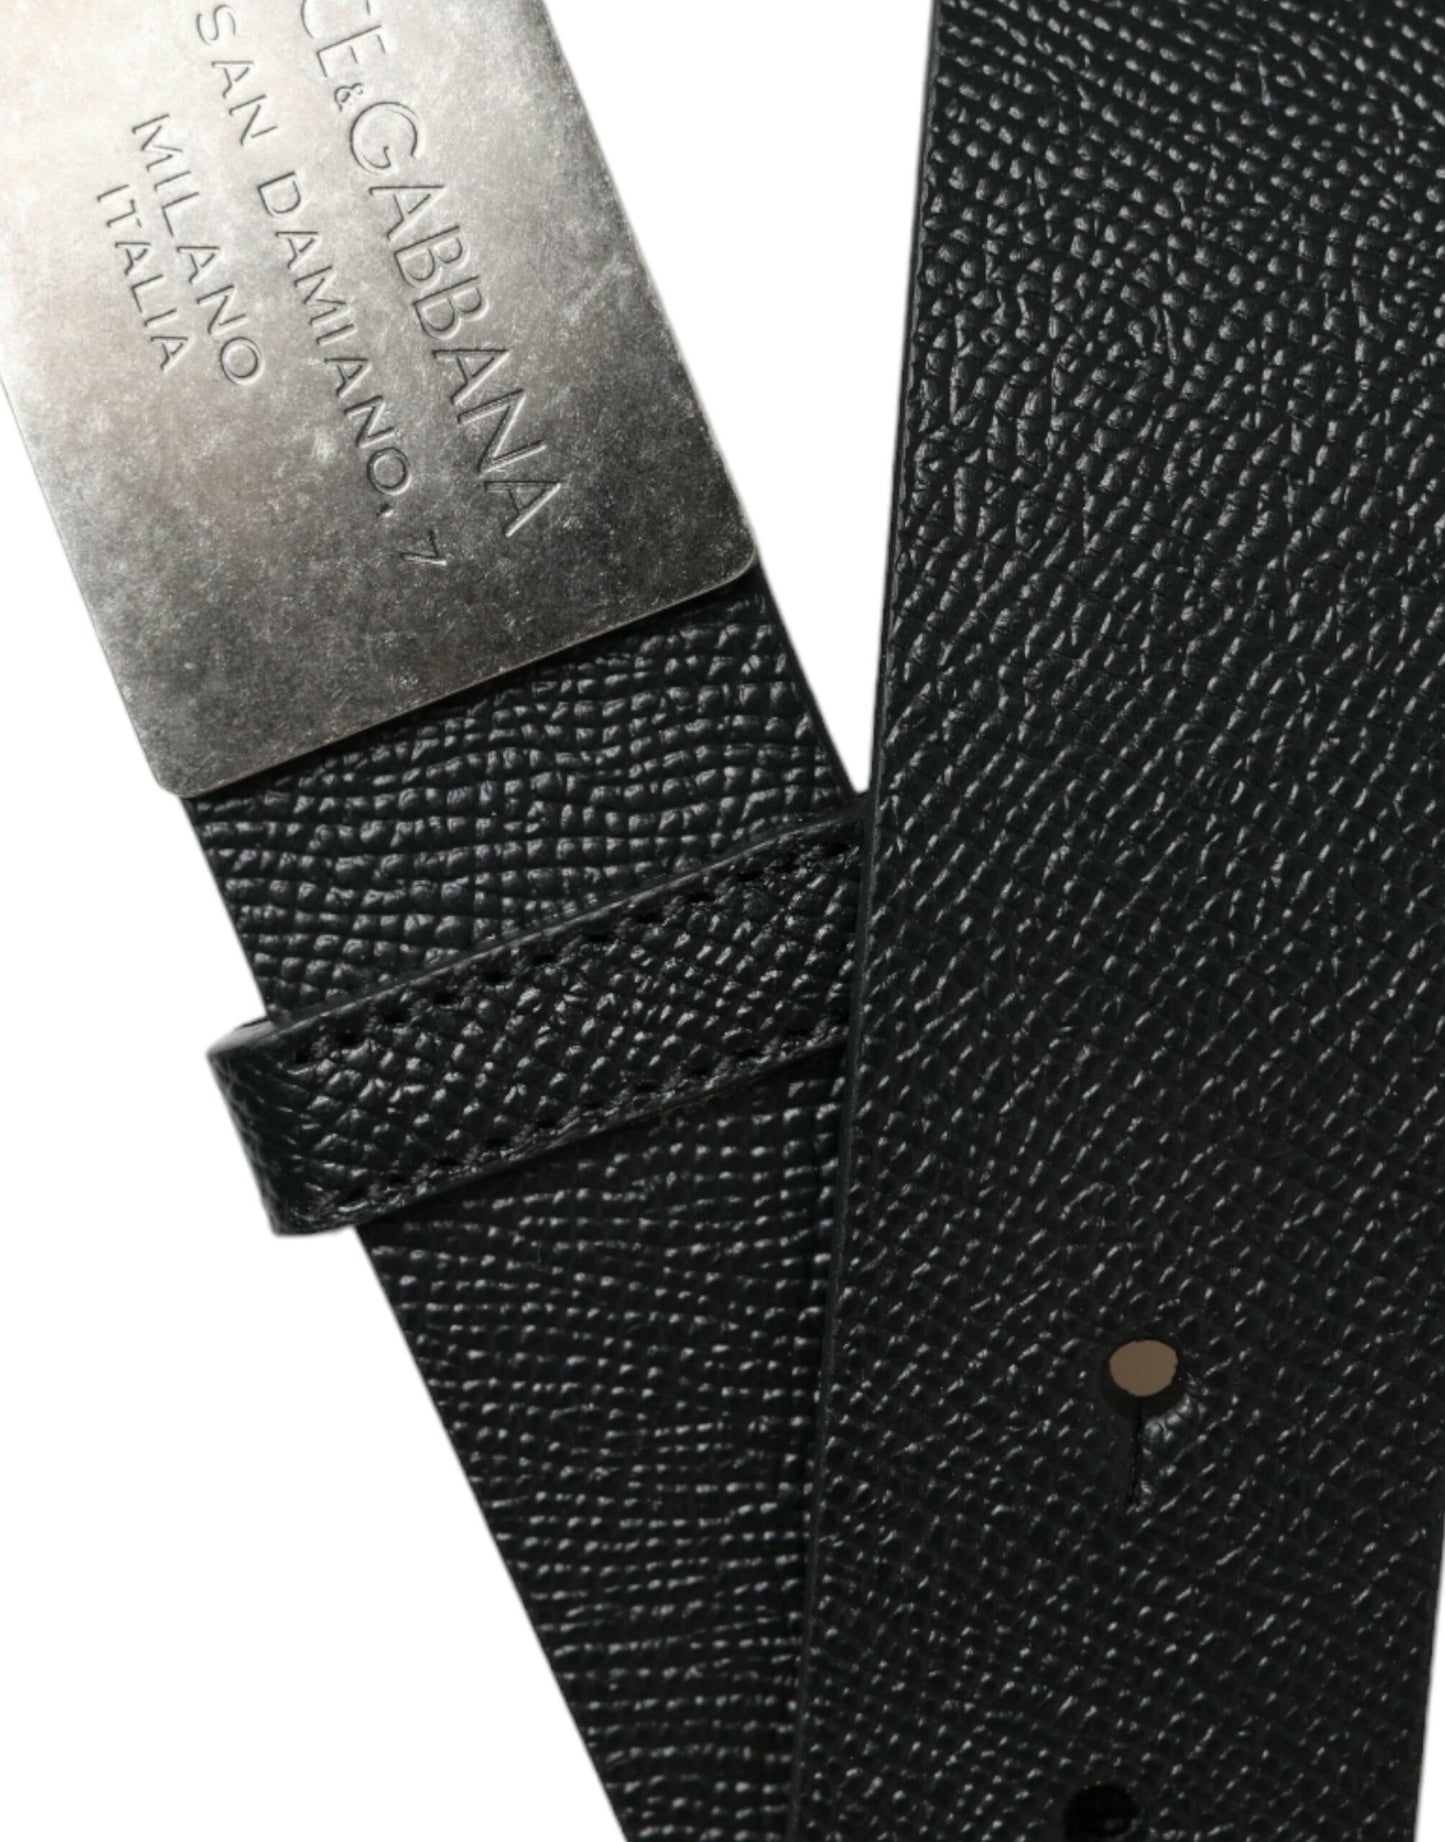 Dolce & Gabbana Elegant Black Calfskin Leather Belt